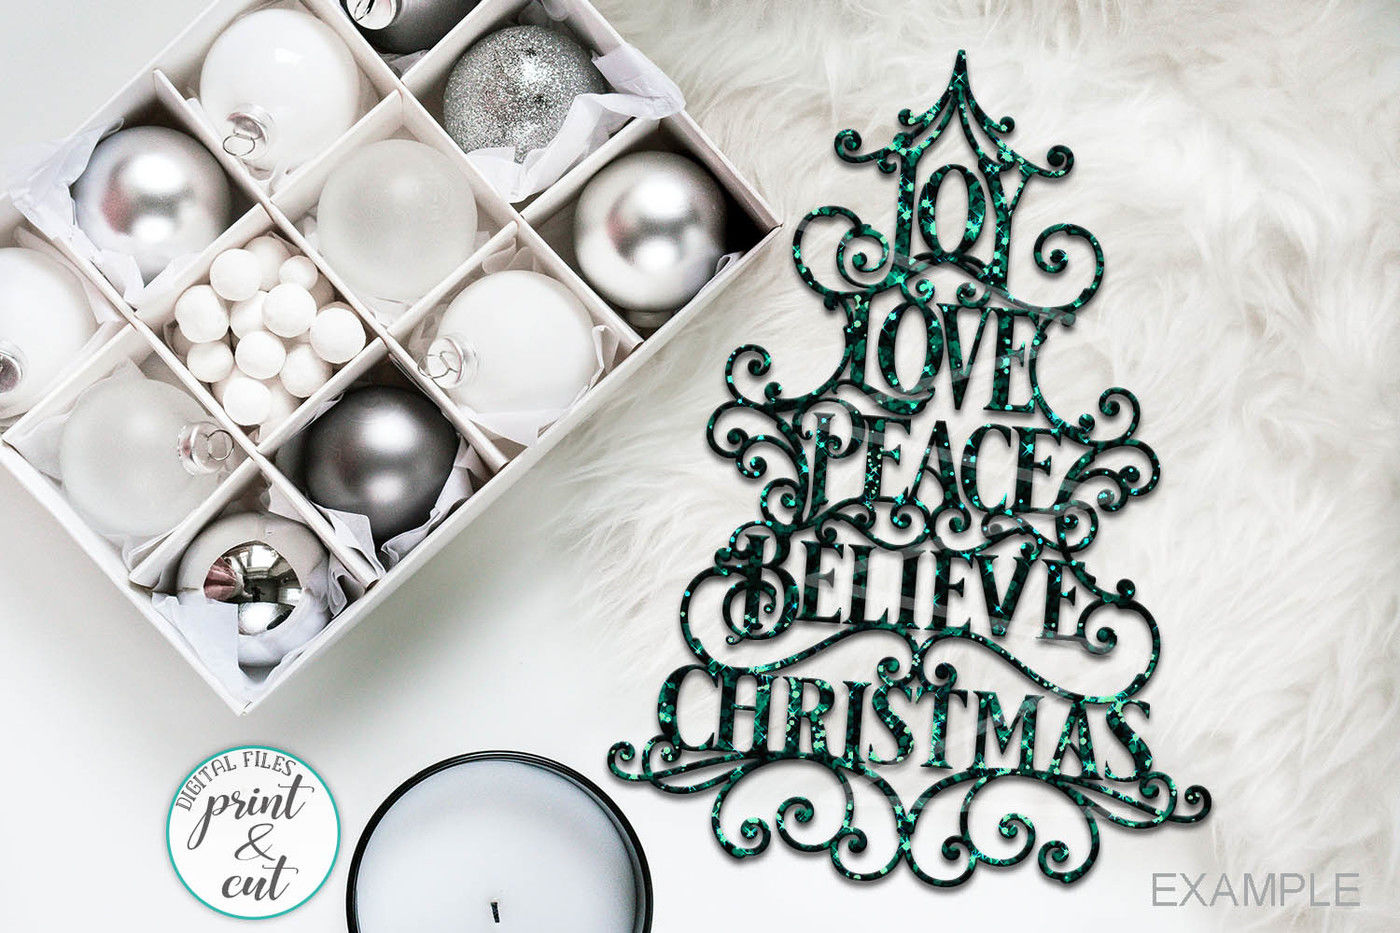 Joy Love Peace Believe Christmas Svg Dxf Pdf Cut File By Kartcreation Thehungryjpeg Com